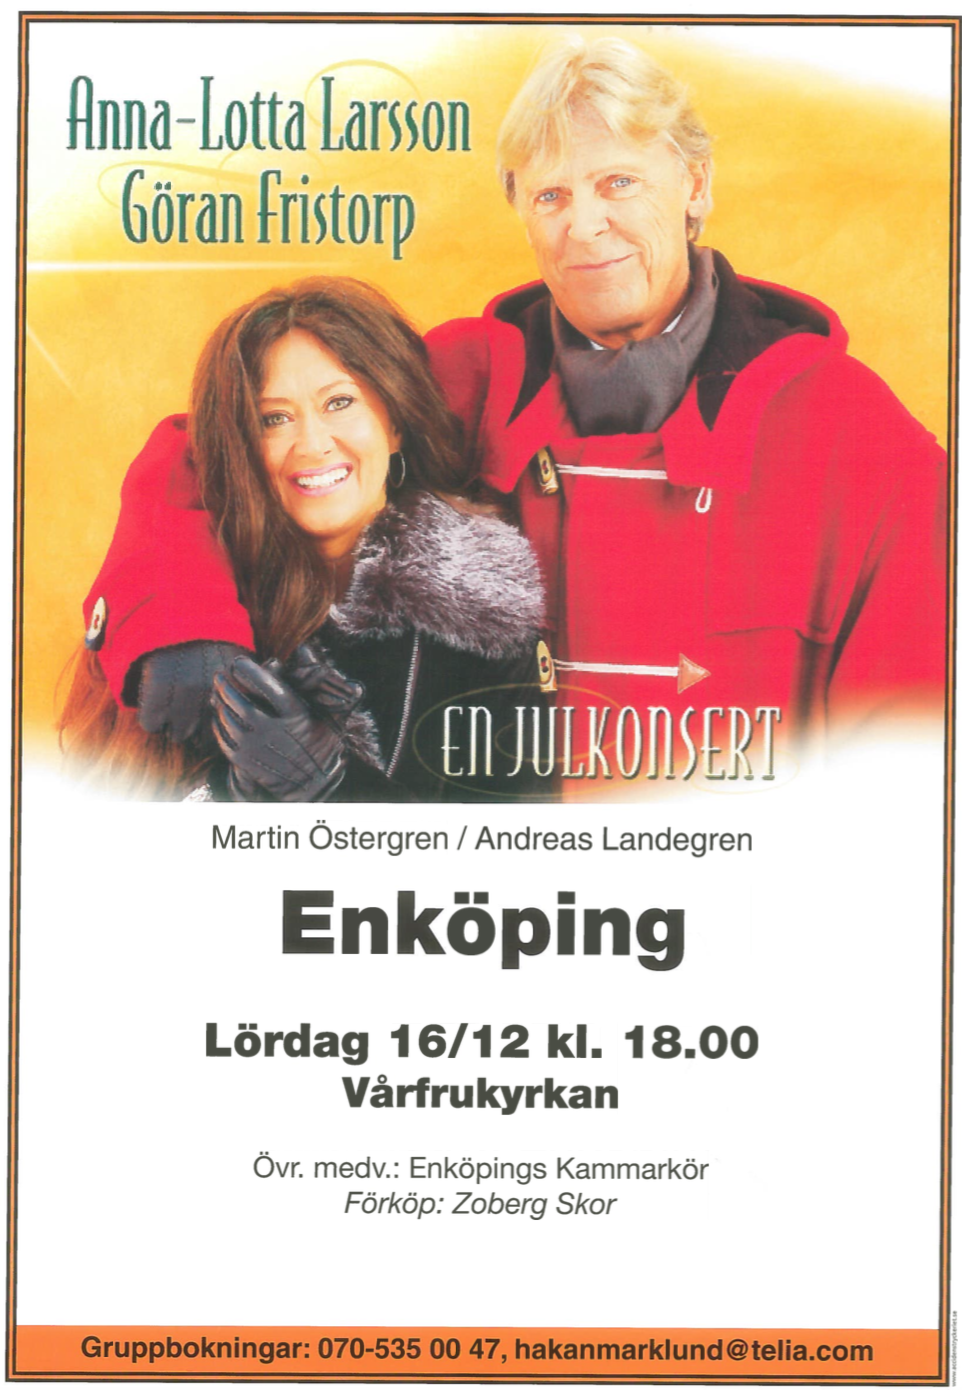 2006-affisch-en-julkonsert-med-enkopings-kammarkor